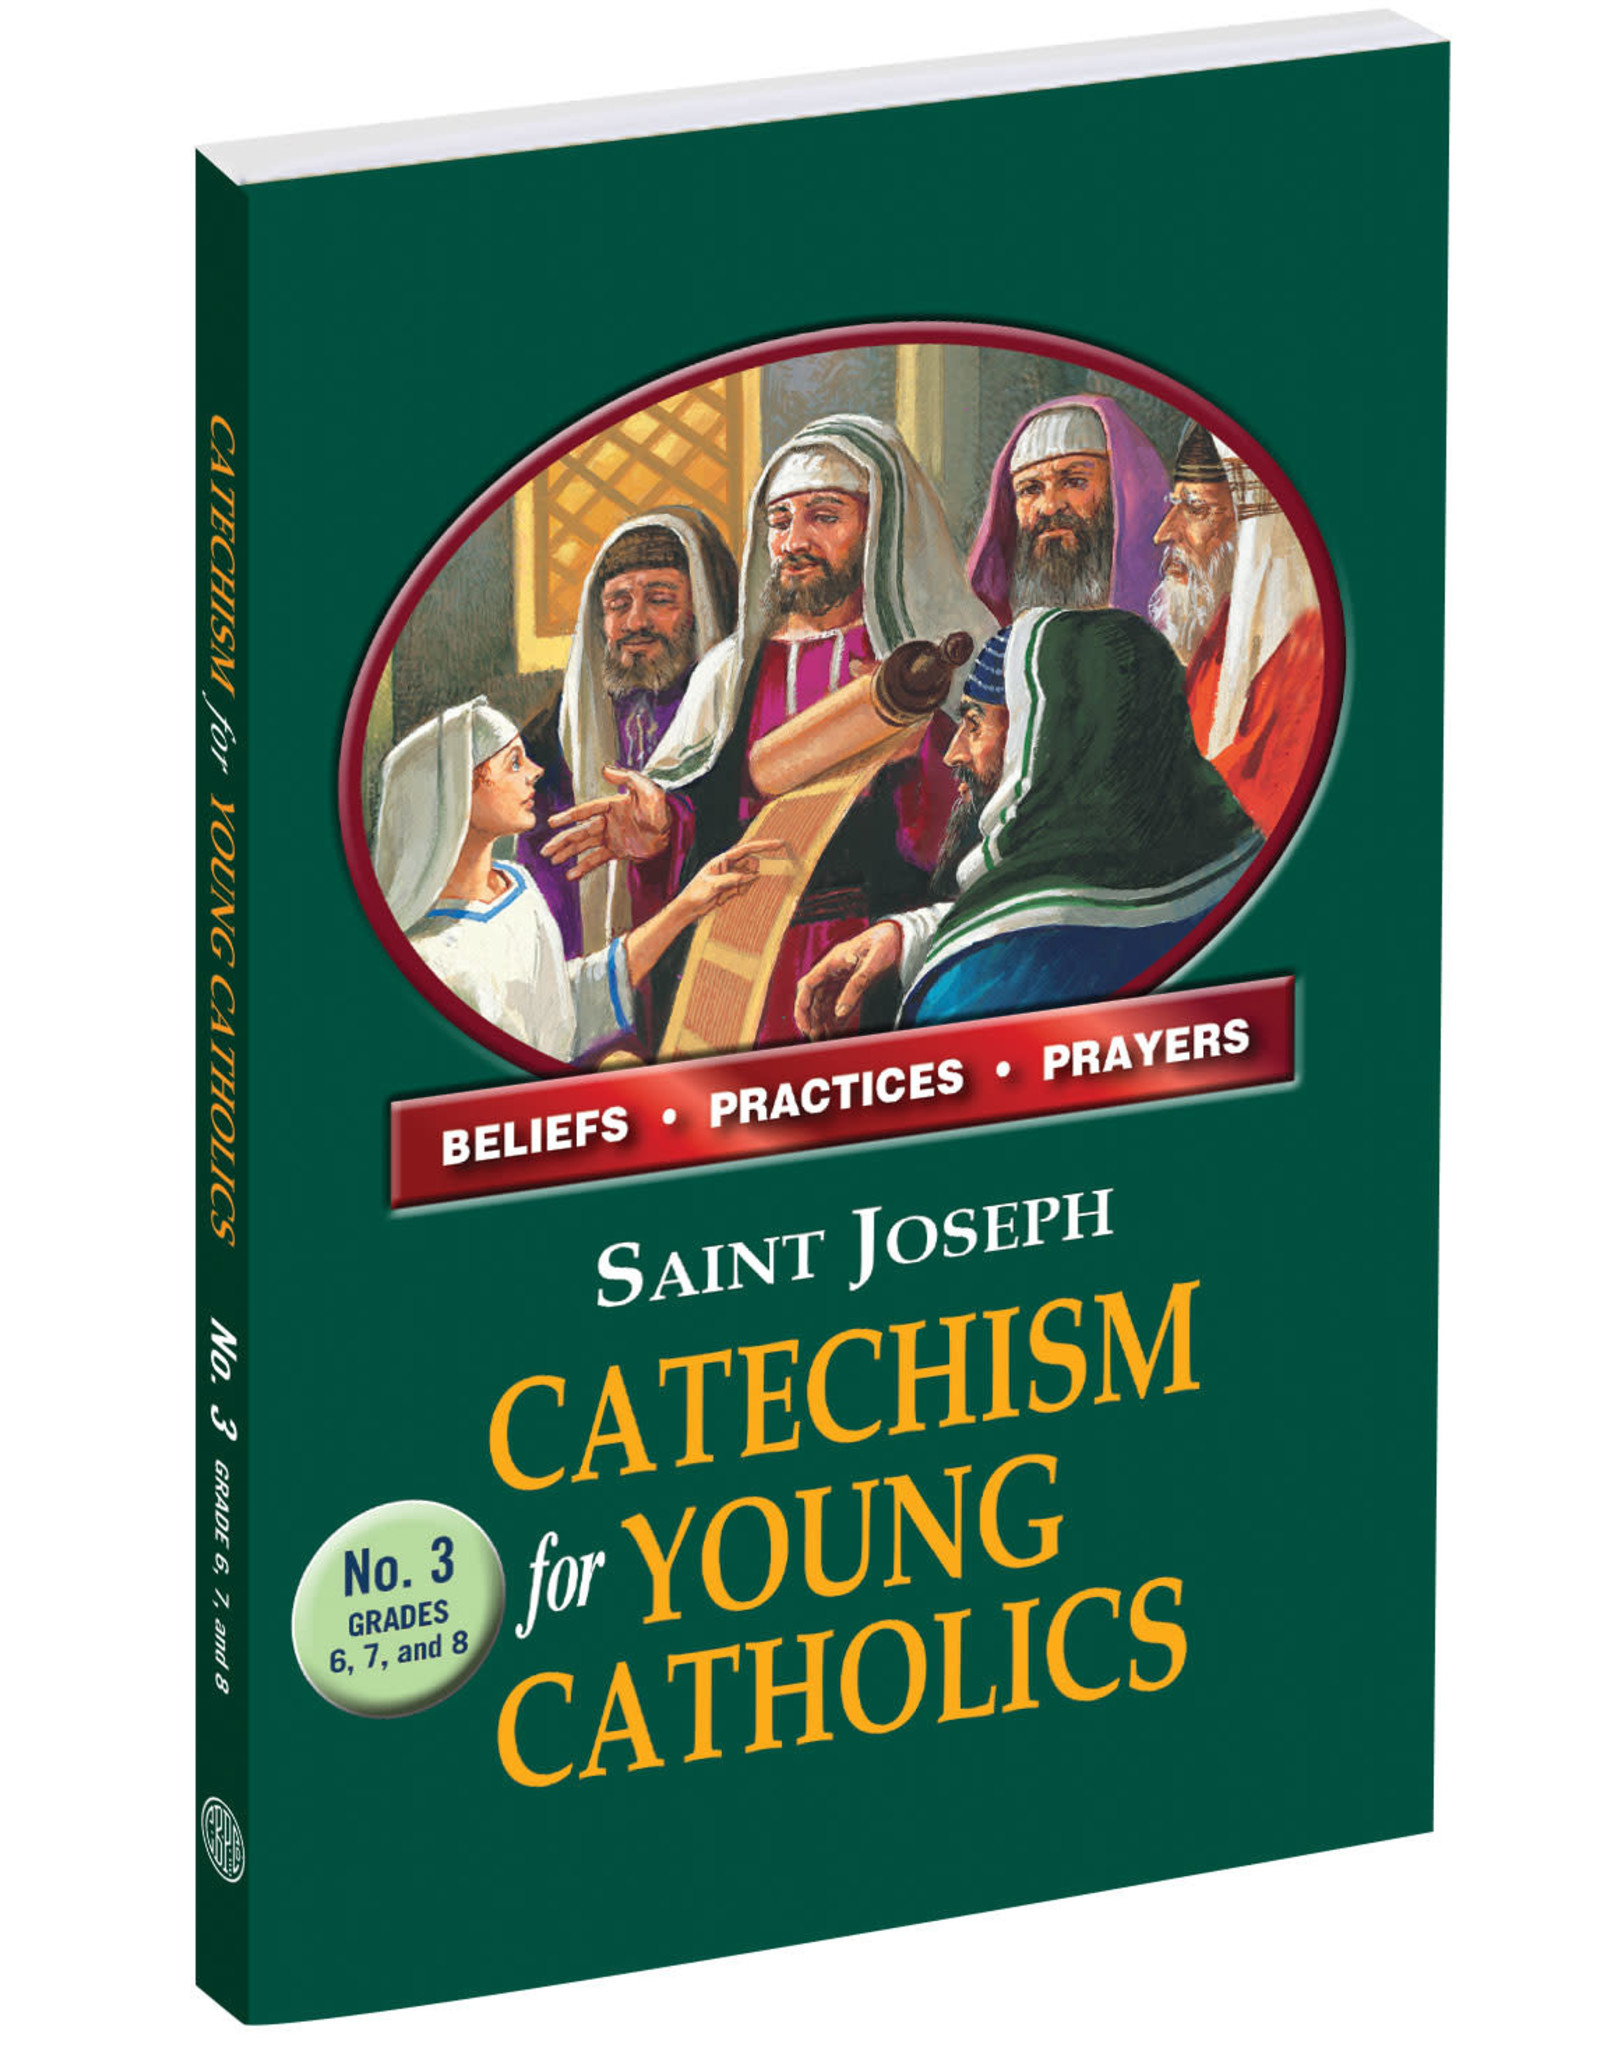 Catholic Book Publishing St. Joseph Catechism For Young Catholics No. 3 (Grades 6, 7, 8)